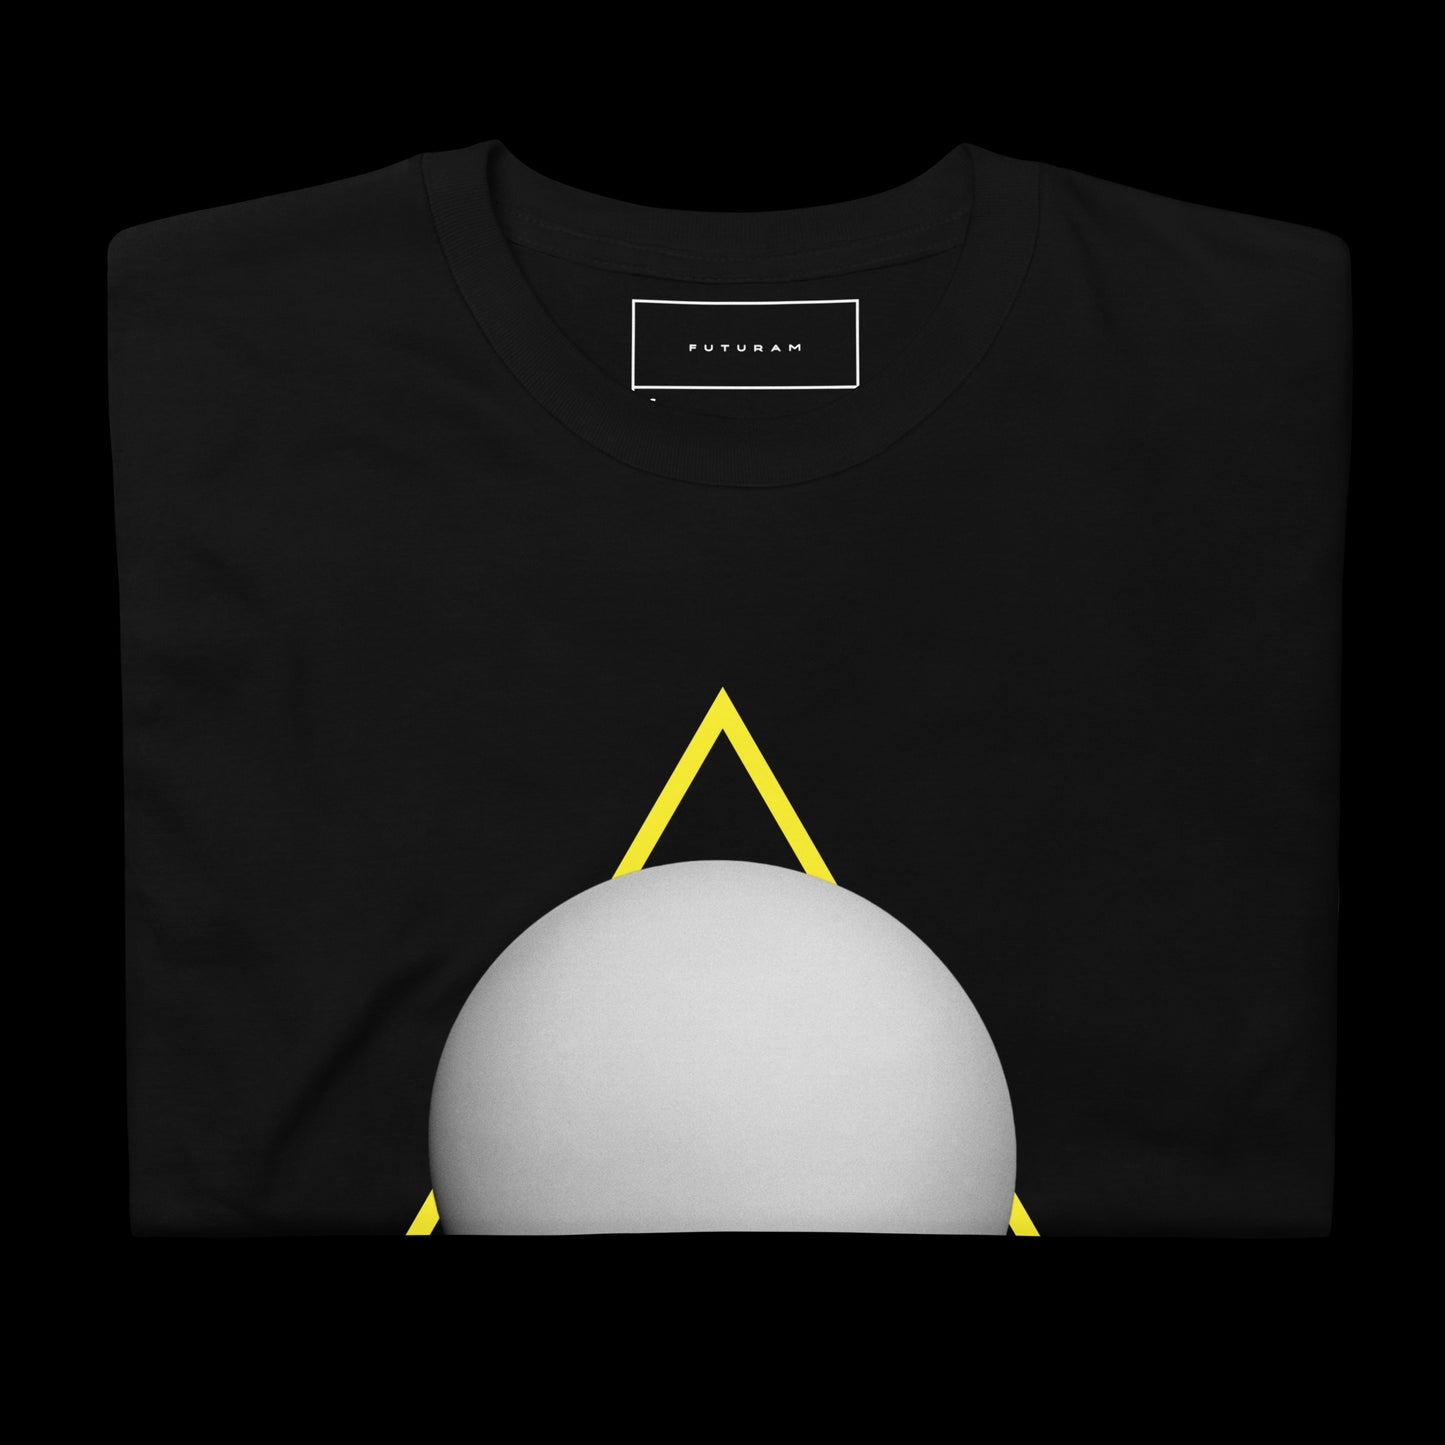 Triangle of Madness - Universal T-Shirt